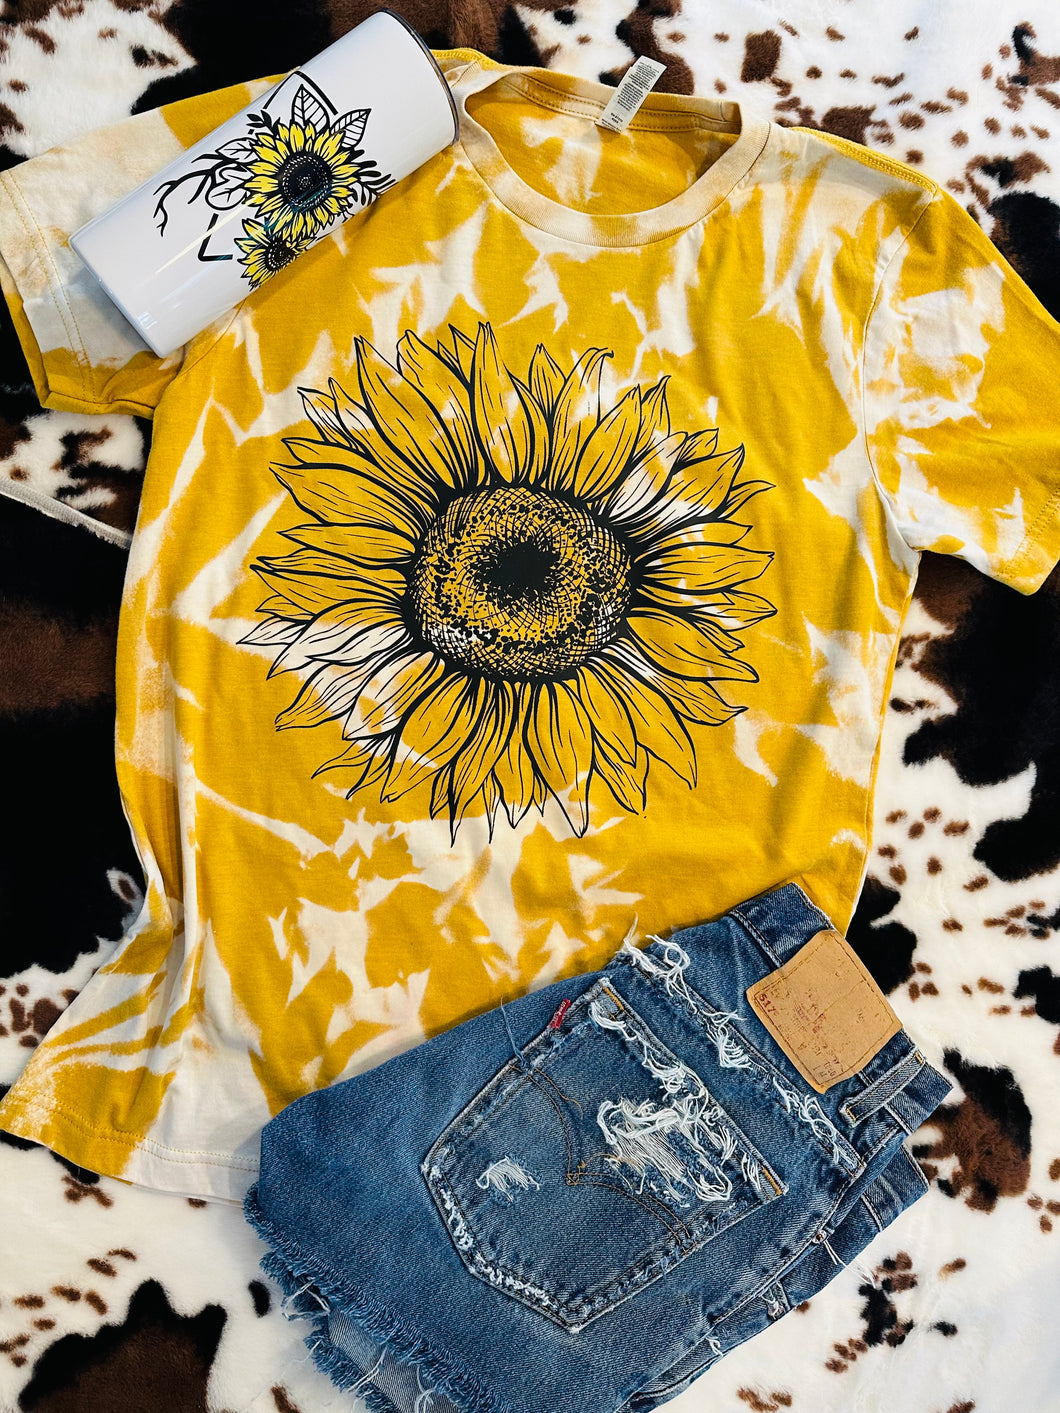 Bleached tie dye sunflower graphic tee or sweatshirt - Mavictoria Designs Hot Press Express